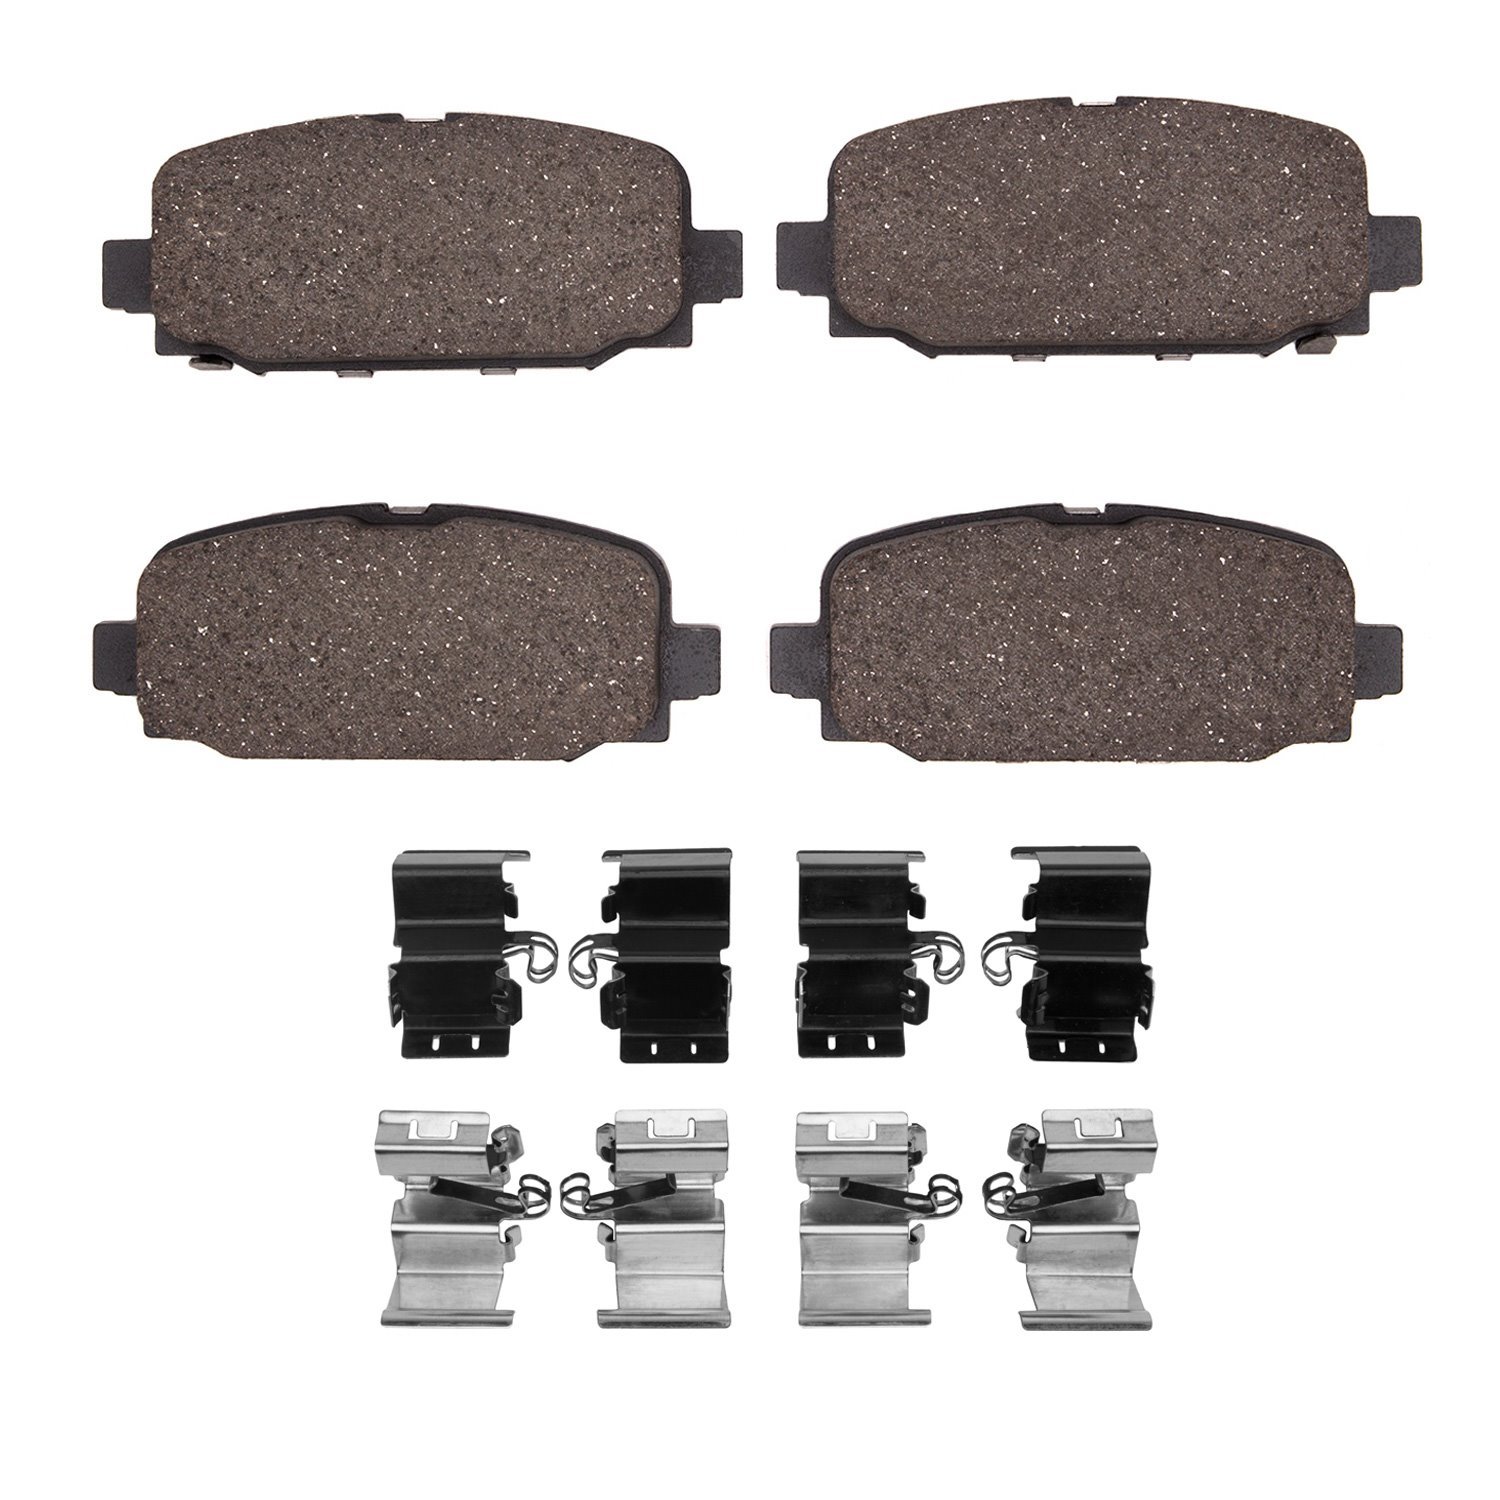 1551-2081-01 5000 Advanced Ceramic Brake Pads & Hardware Kit, Fits Select Mopar, Position: Rear